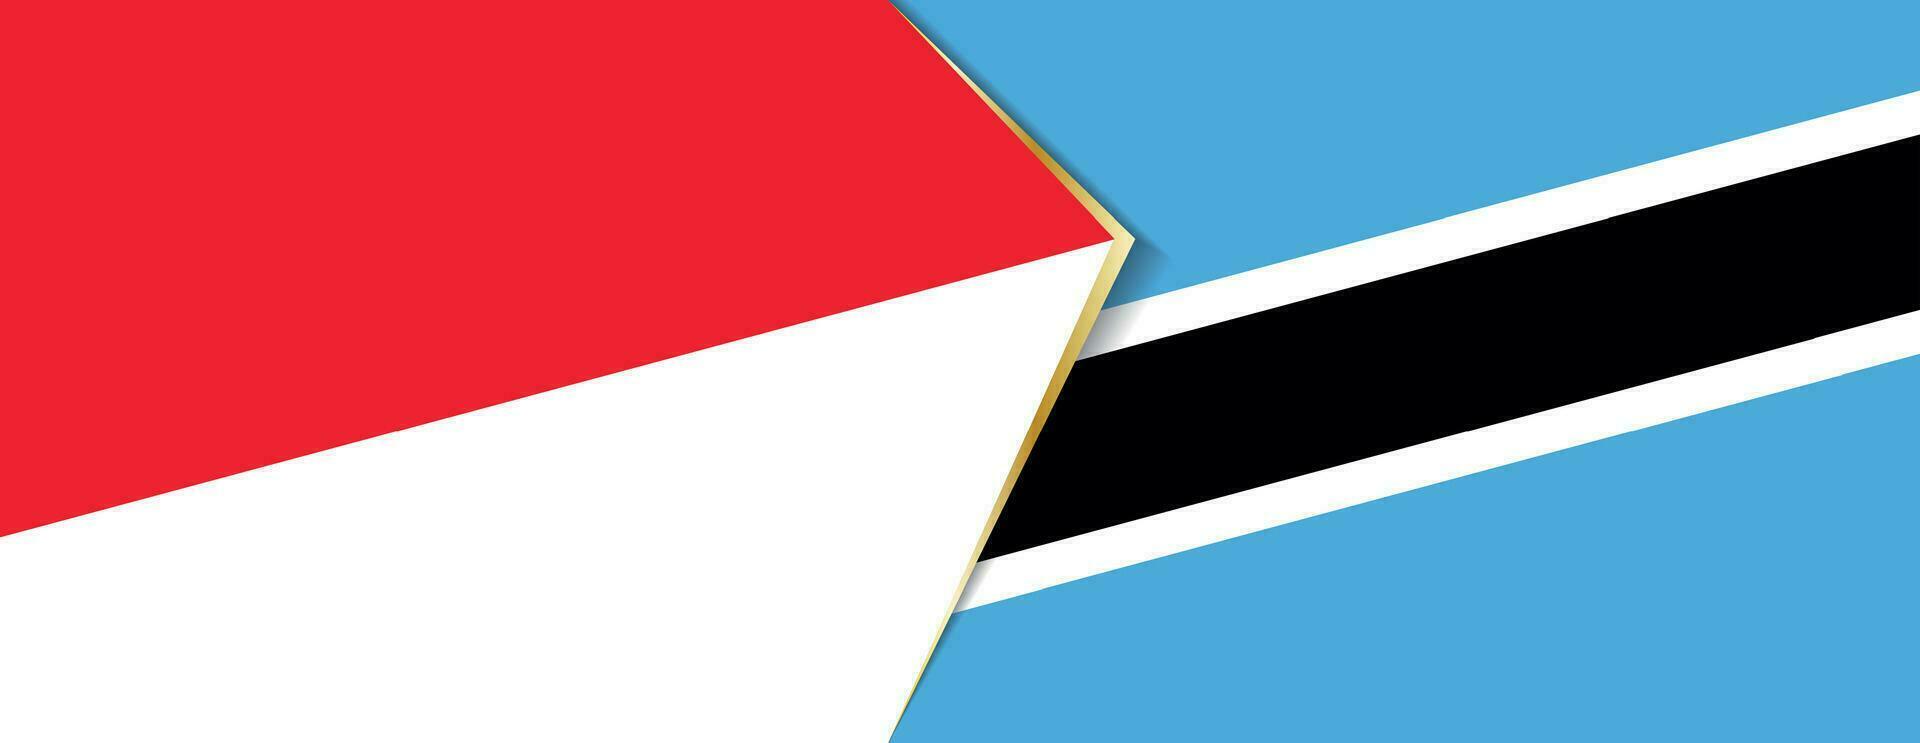 Indonesia e Botswana bandiere, Due vettore bandiere.